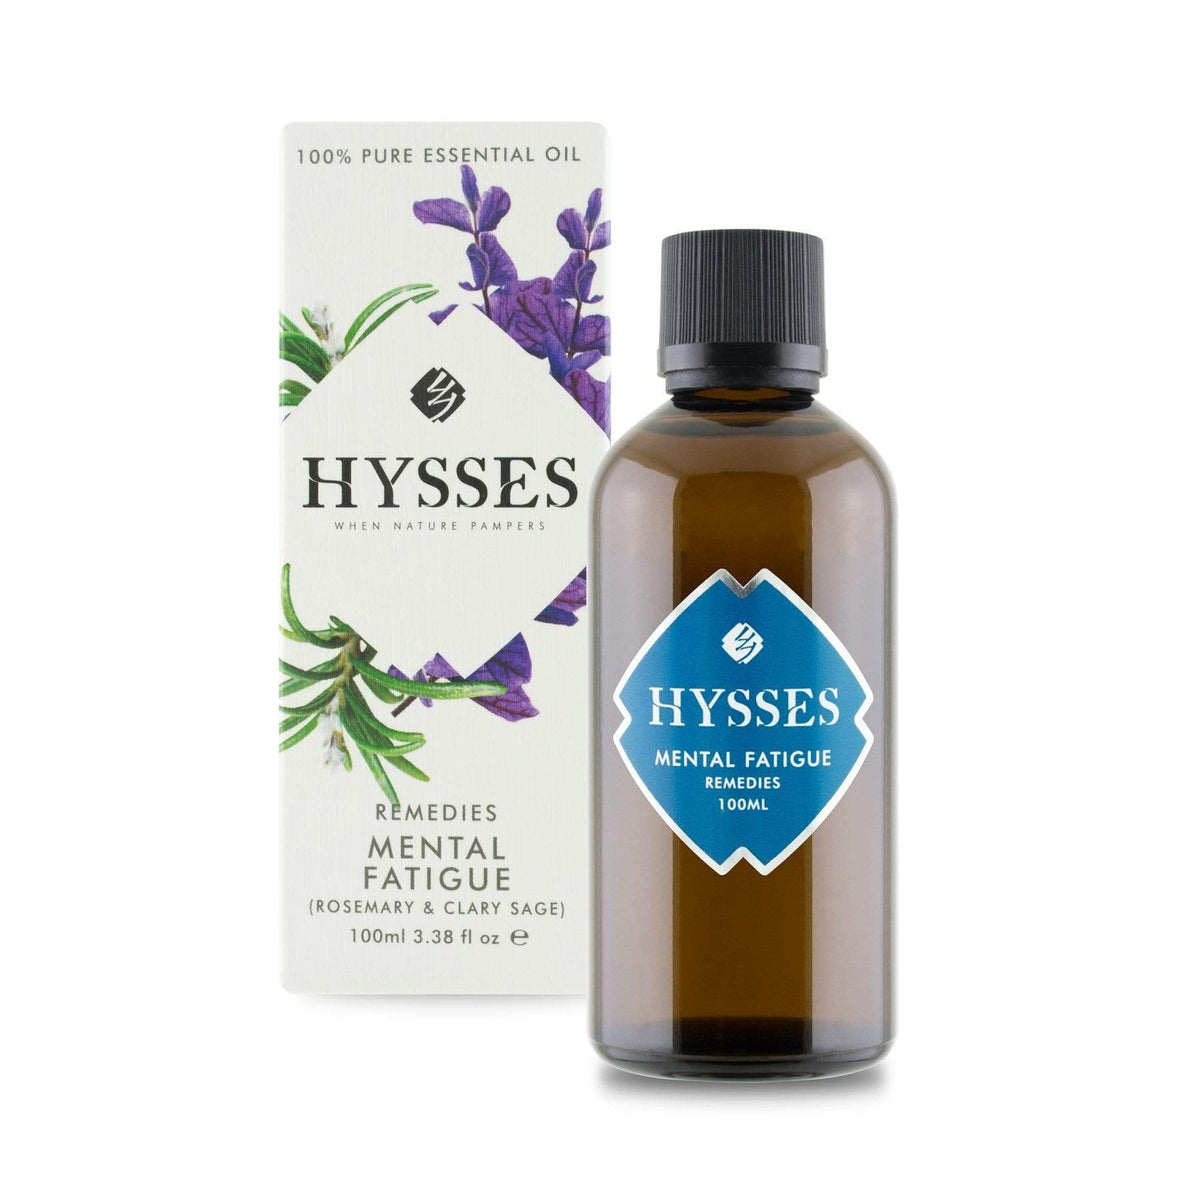 Hysses Essential Oil 100ml Remedies, Mental Fatigue